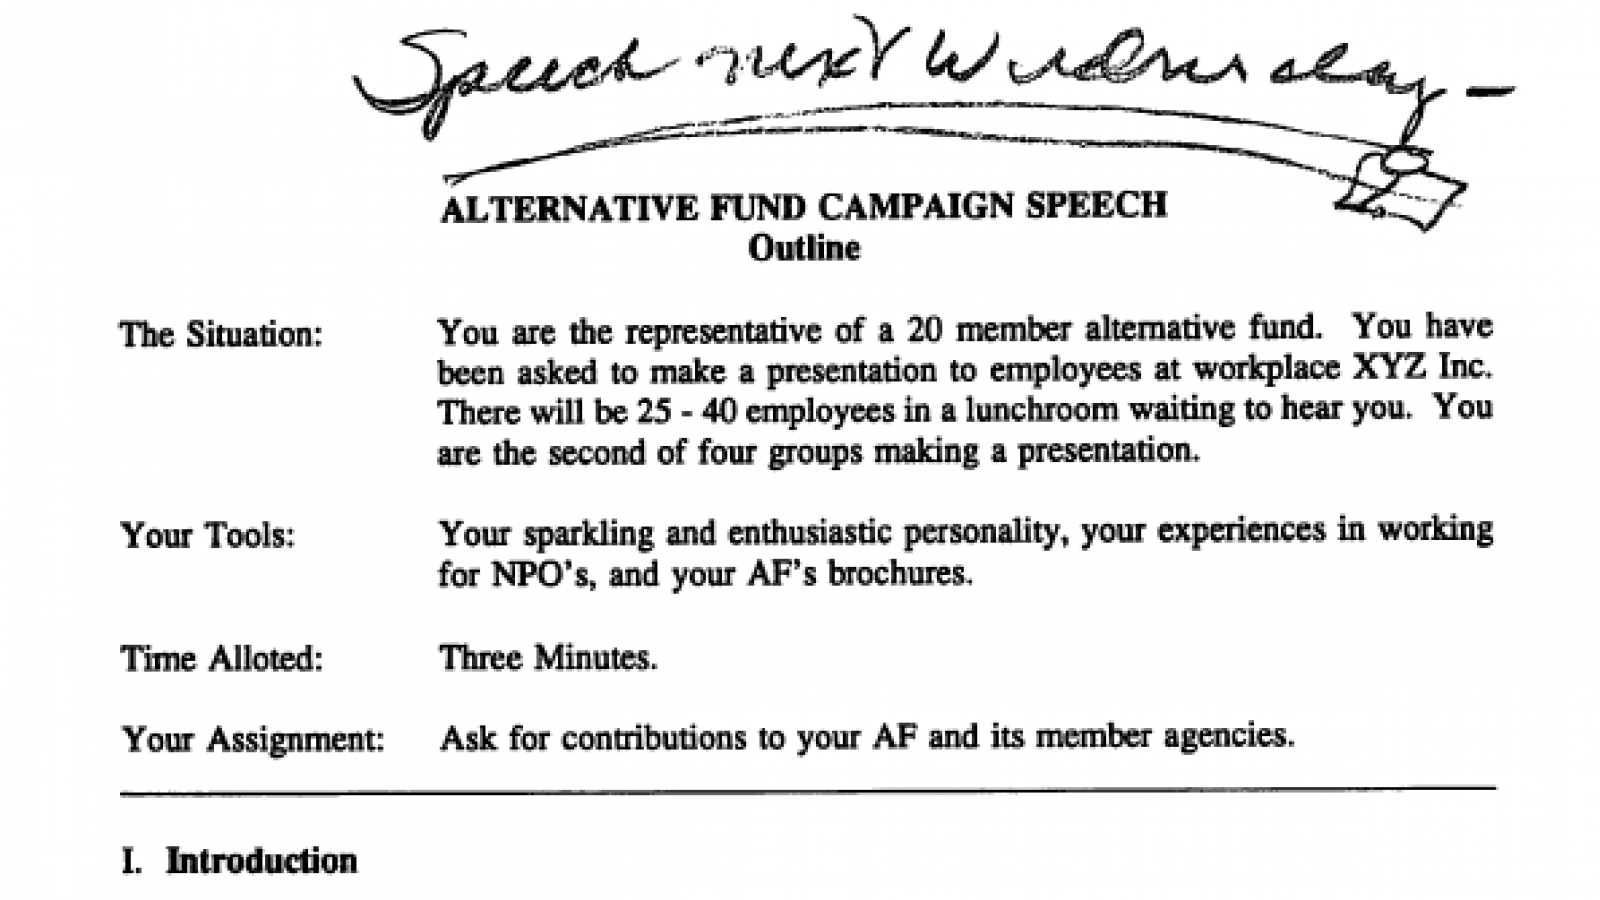 Alternative Fund Campaign Speech Outline